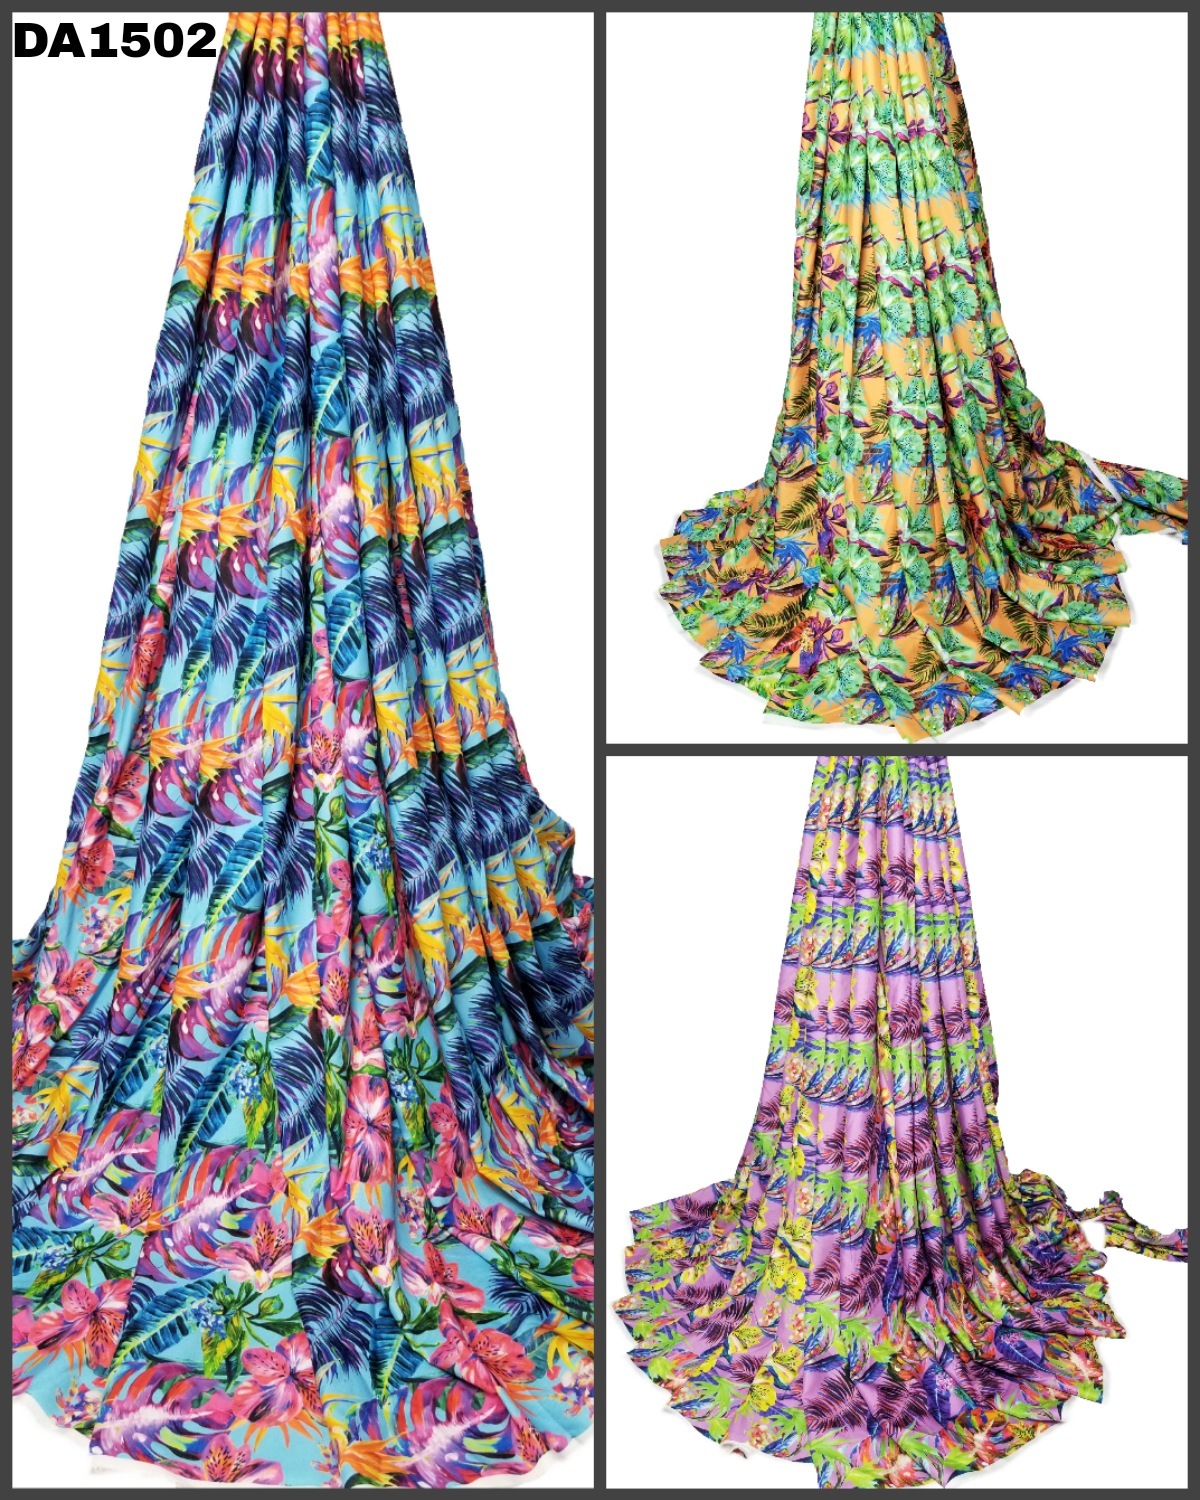 Colorful Digital Print Design on Rayon Slub Fabric